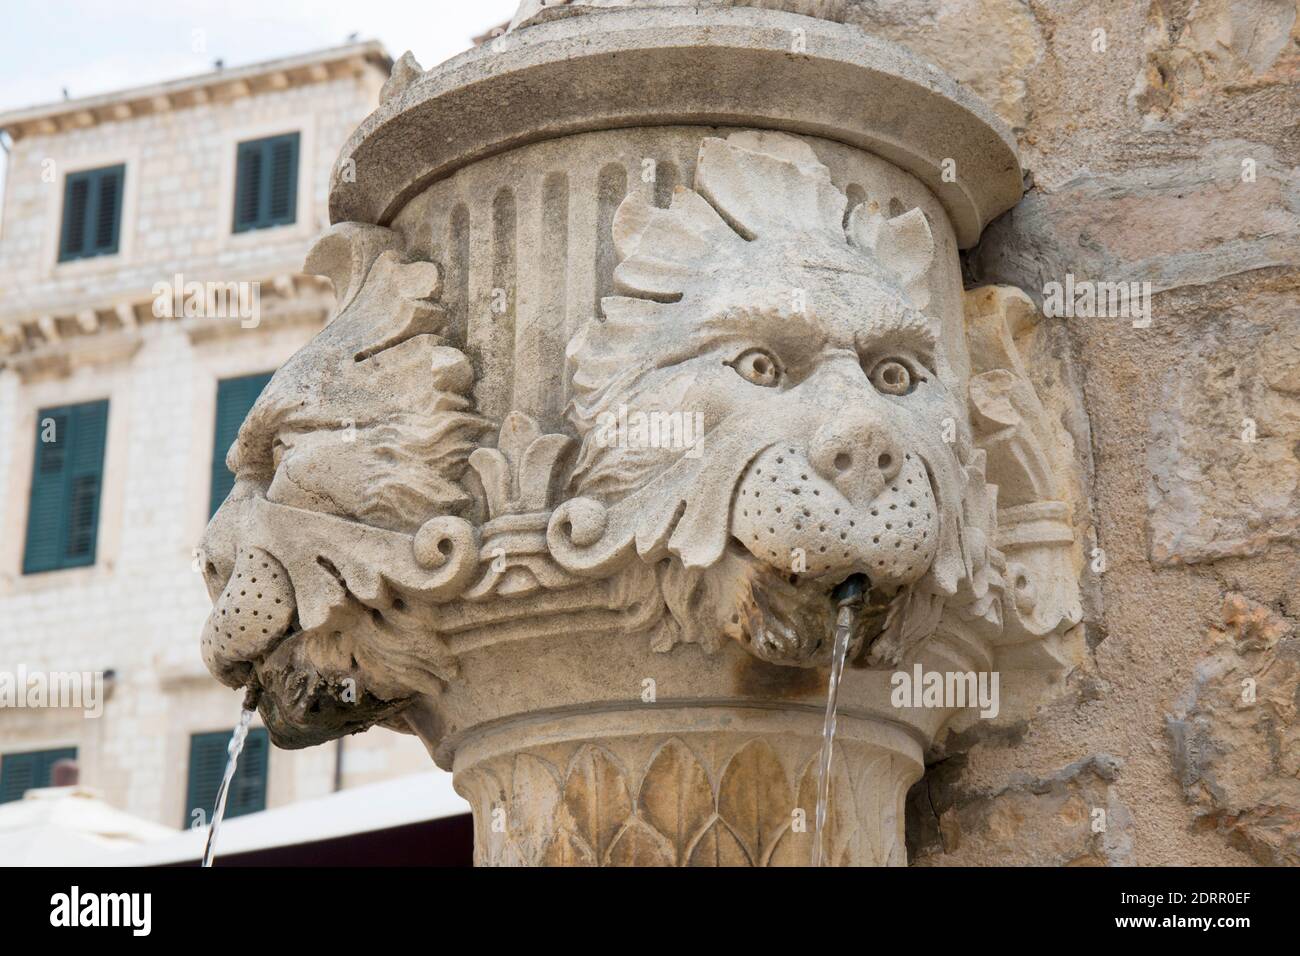 Dubrovnik, Dubrovnik-Neretva, Croatia. Stone fountain carved with lions' heads in Gundulić Square. Stock Photo